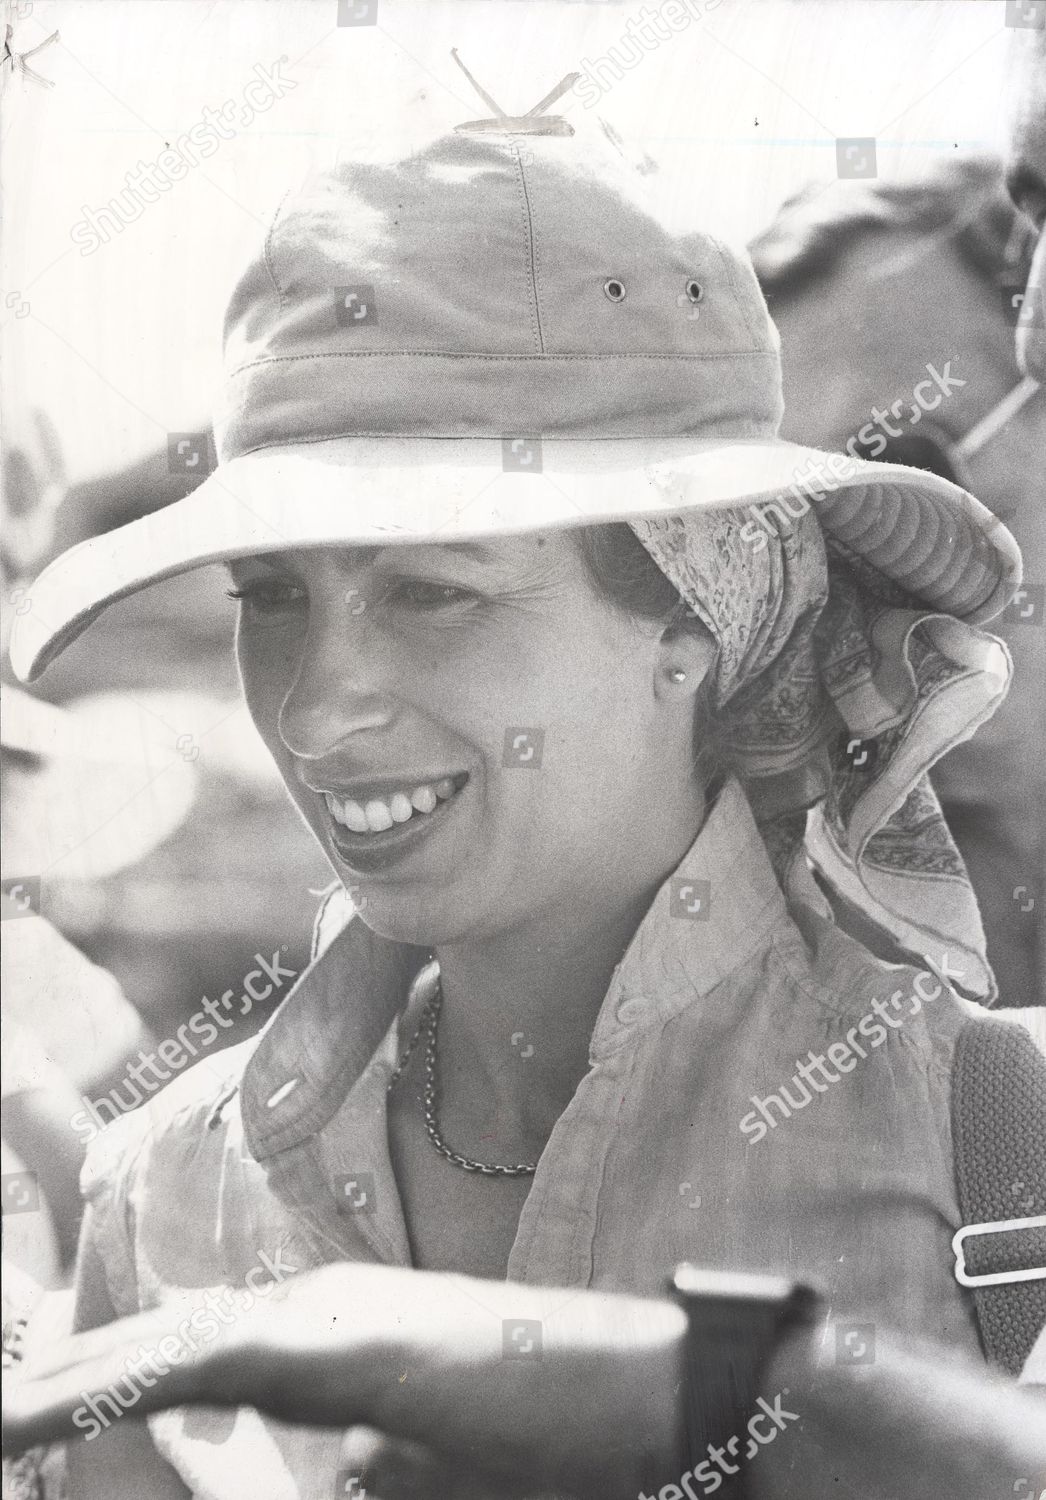 princess-anne-now-princess-royal-visit-to-africa-october-1982-princess-anne-in-somalia-royal-visits-shutterstock-editorial-930153a.jpg